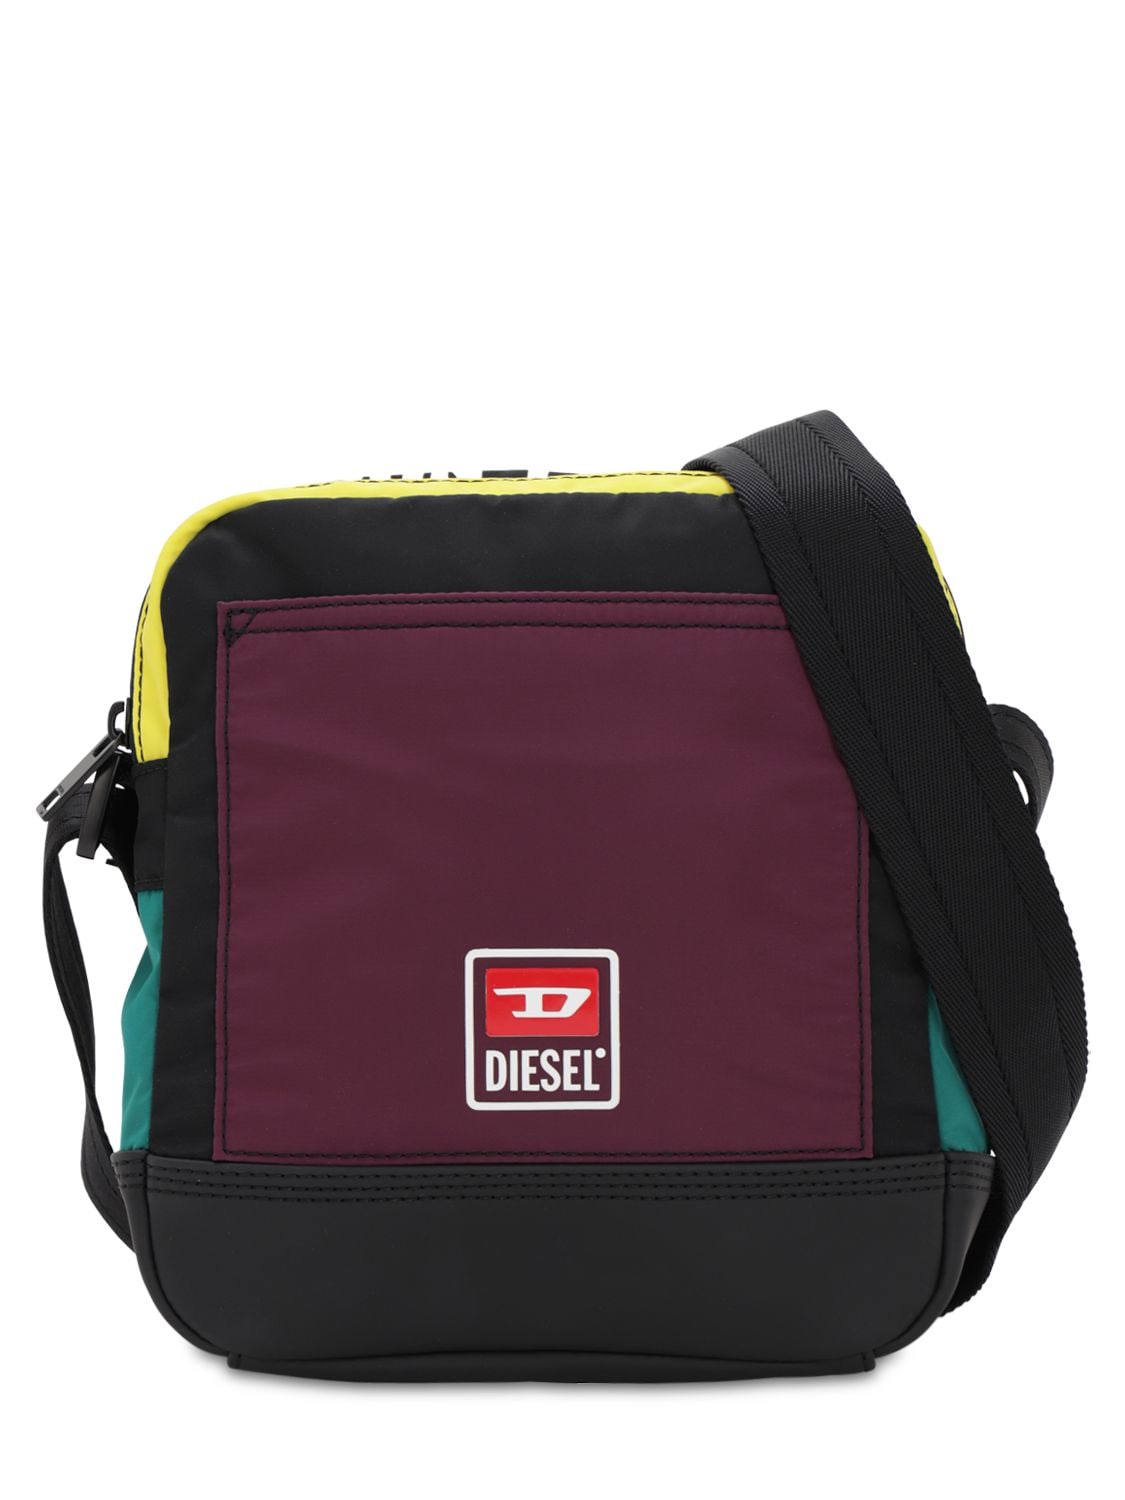 Diesel Multicolor Nylon Crossbody Bag